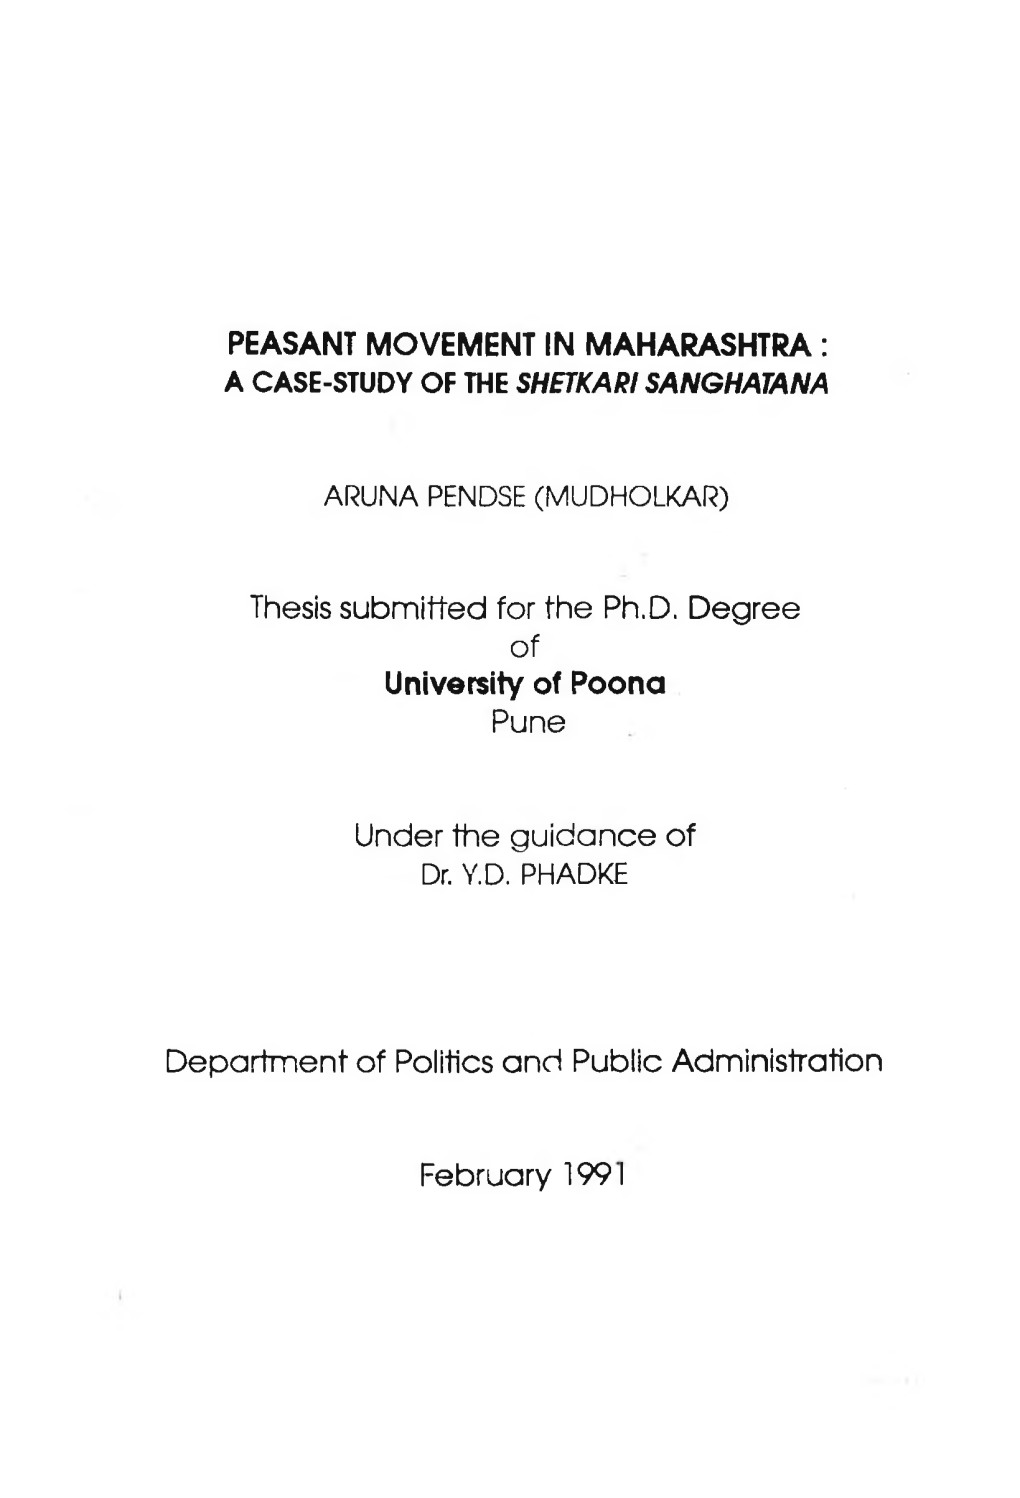 Peasant Movement in Maharashtra : a Case-Study of the Shetkarisanghatana